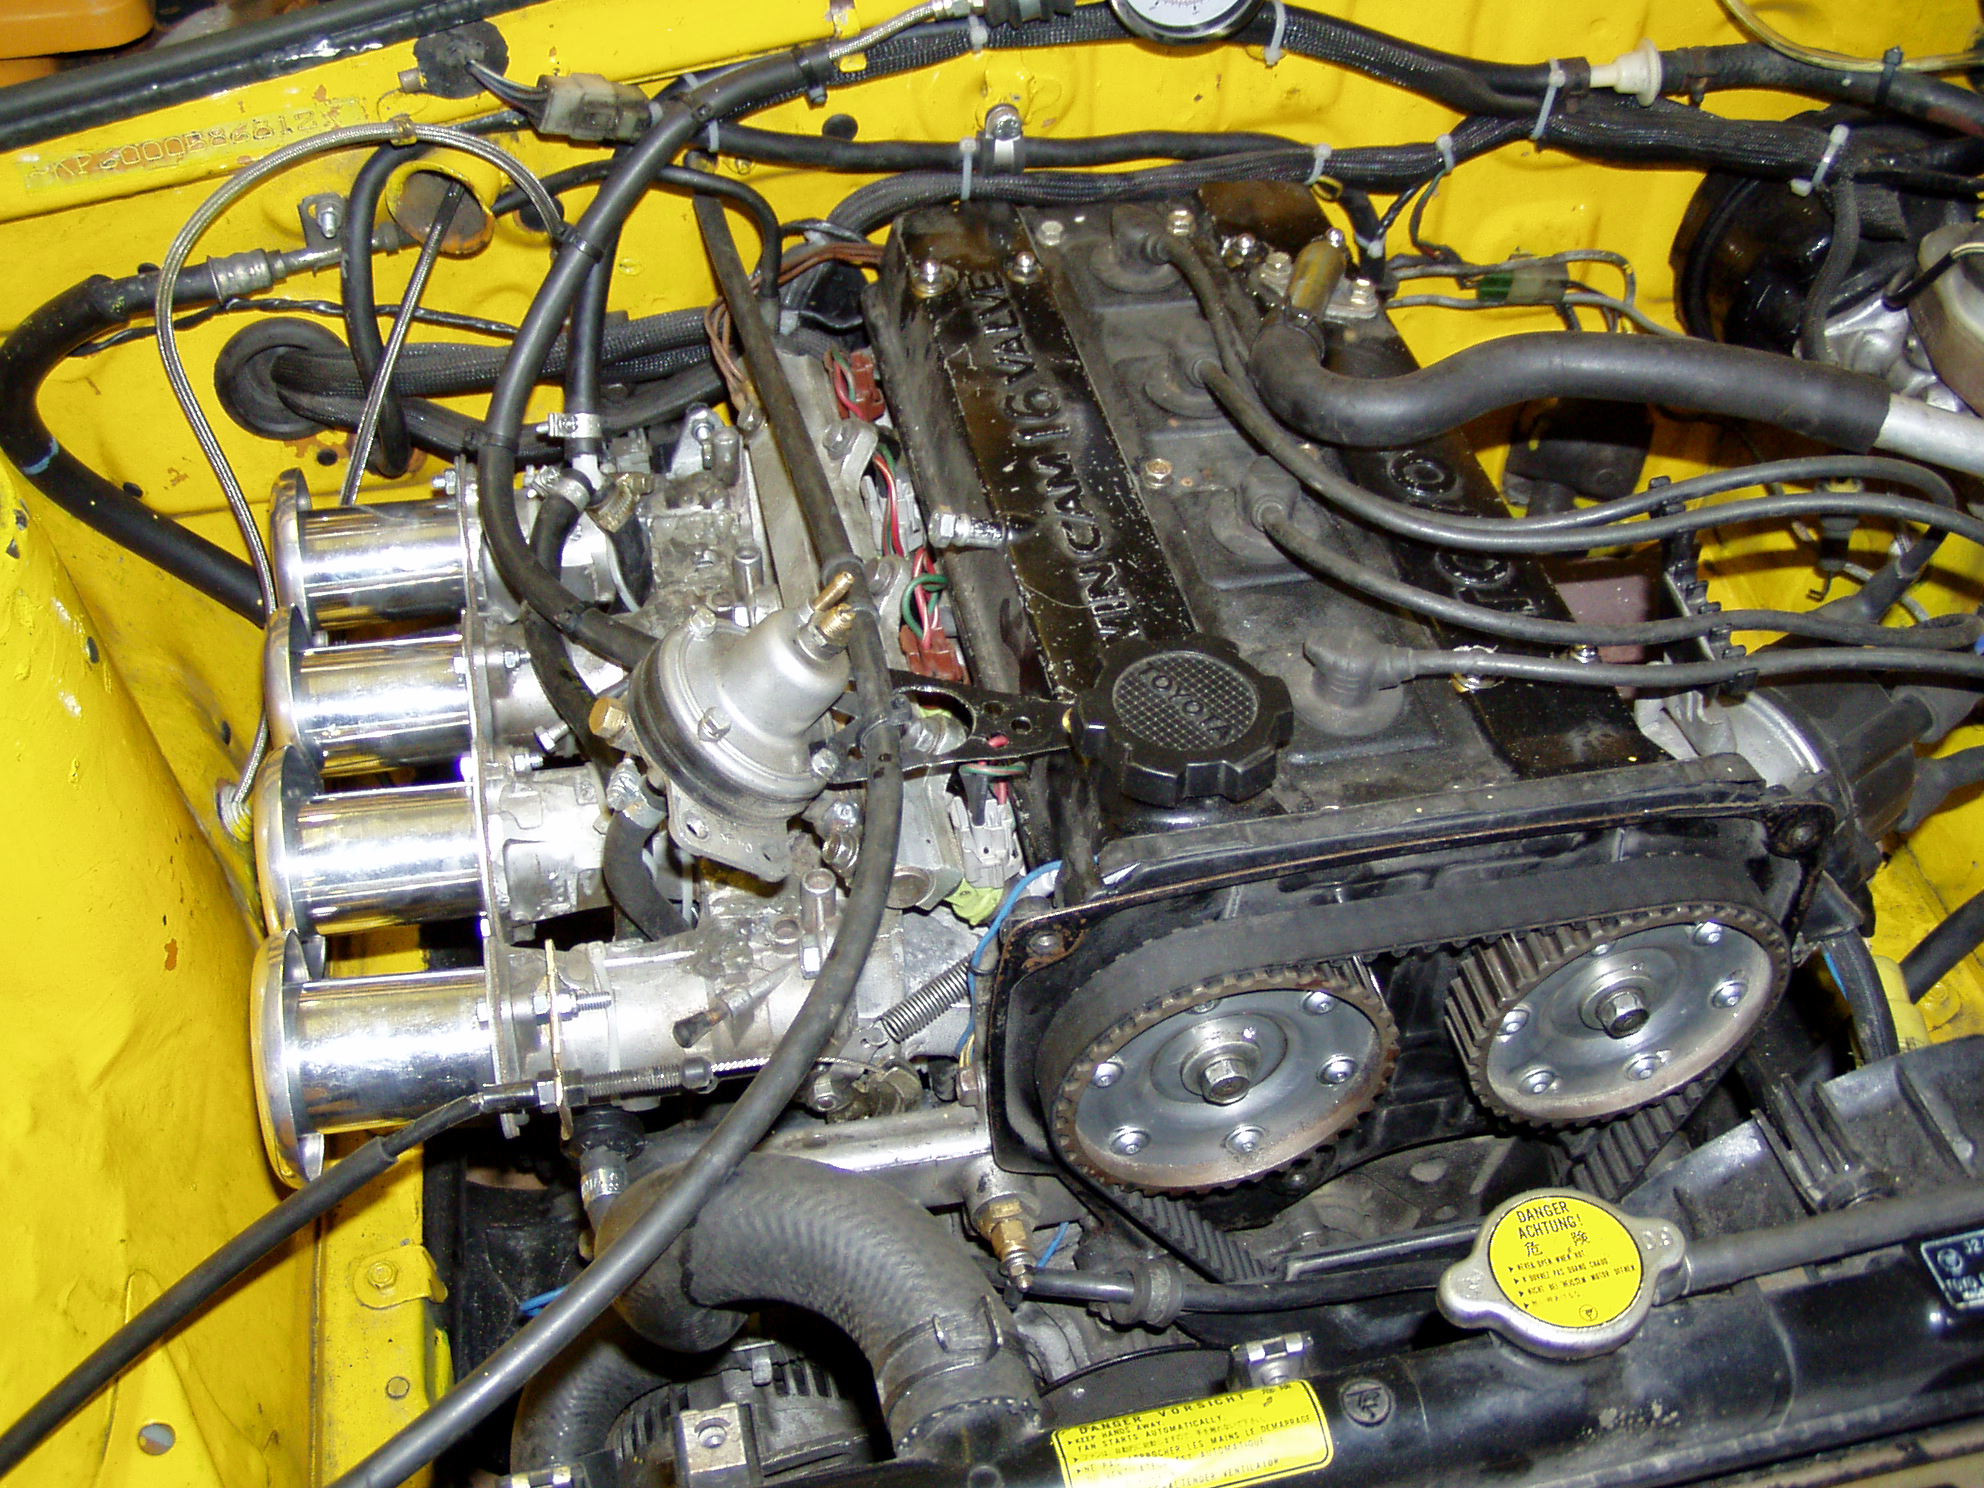 Starletin moottori 2004-2006, 21.5.2006, tuplakaasareista lÃ¤ppÃ¤rungot